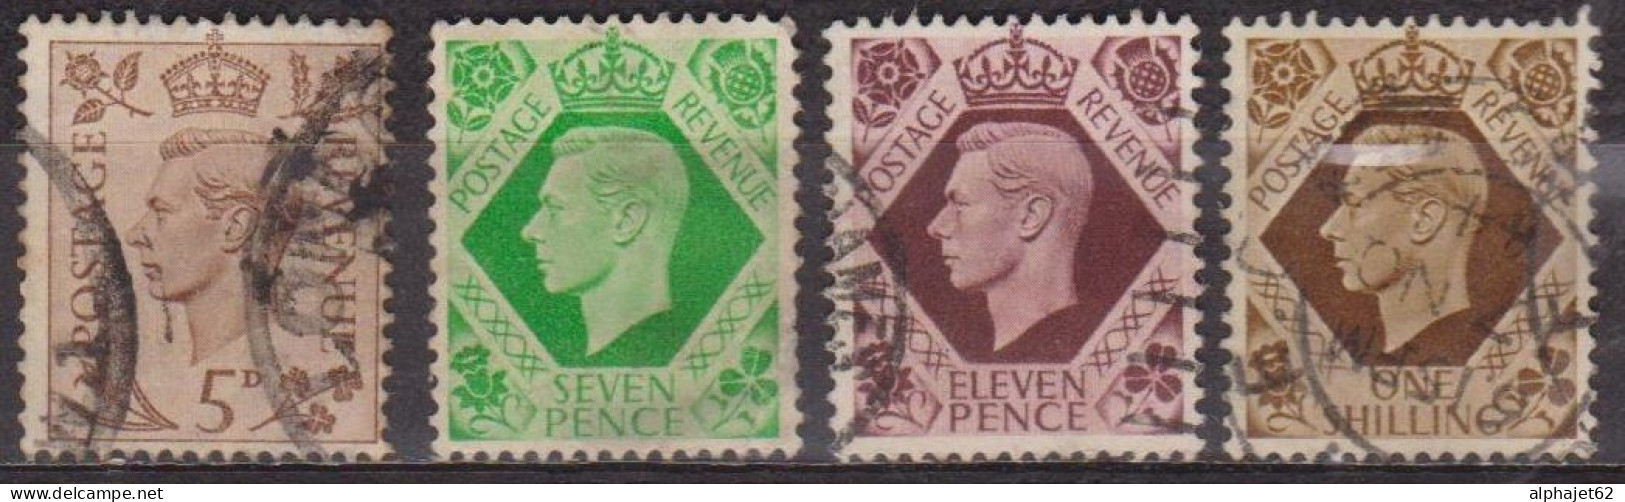 Avènement Du Roi George VI - GRANDE BRETAGNE - 1937 - N° 216-218-221A-222 - Gebruikt